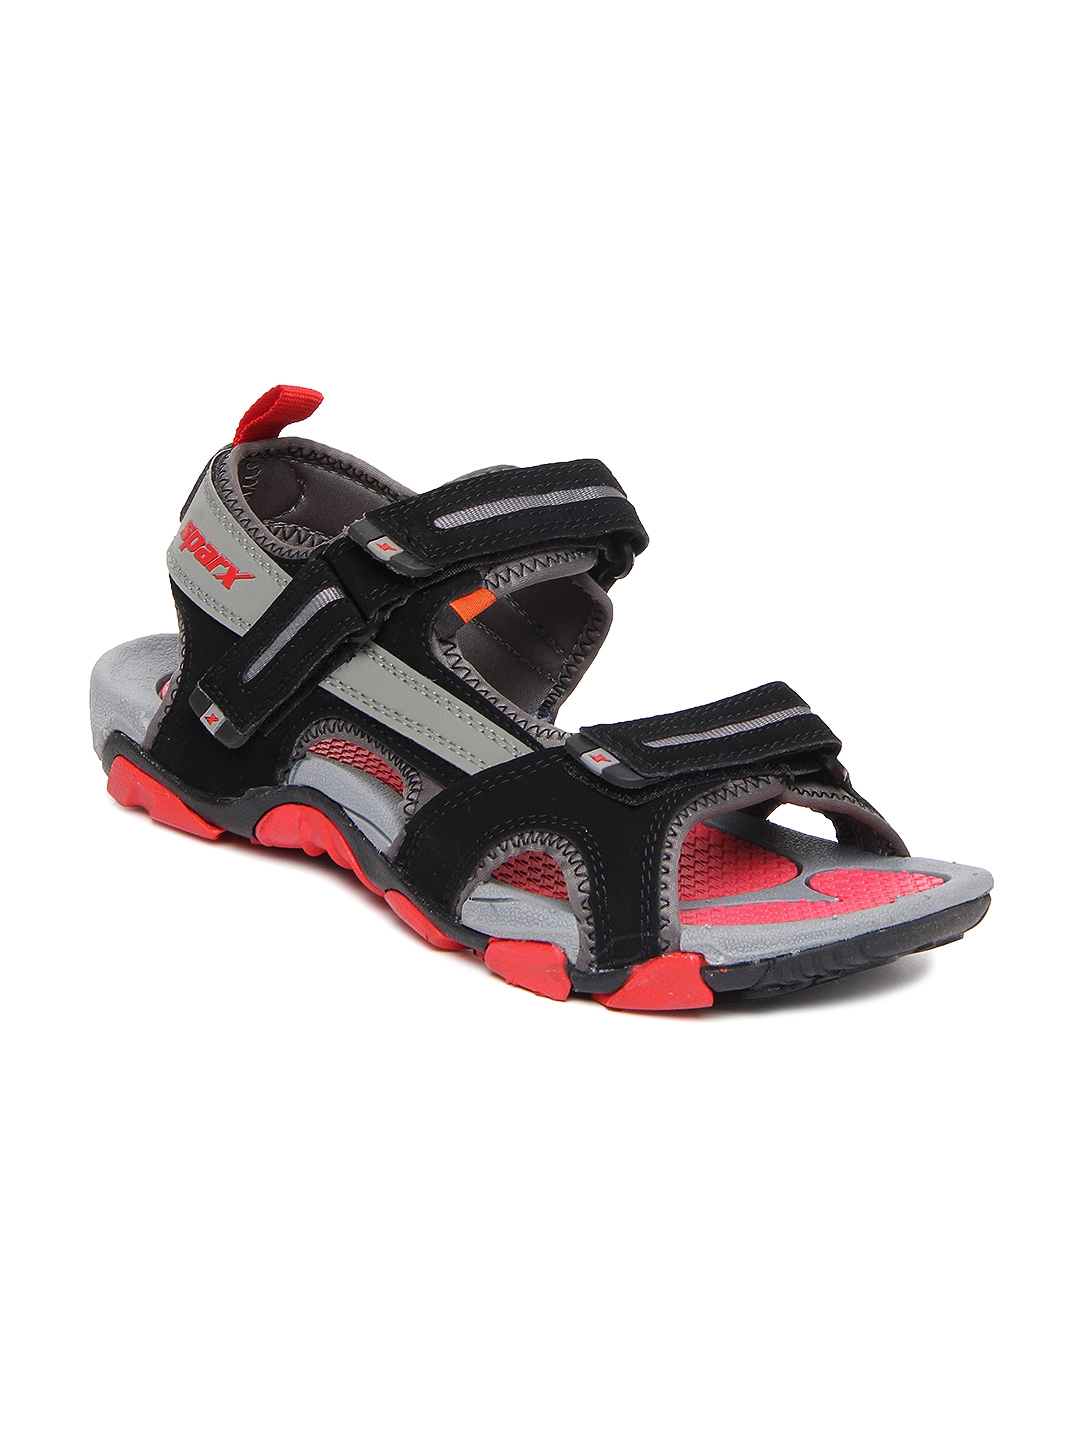 SPARX SS 520 Mens Sandal Unboxing  Review  Sparx Sandals under 1500   Best Sparx Sandals SPARX  YouTube